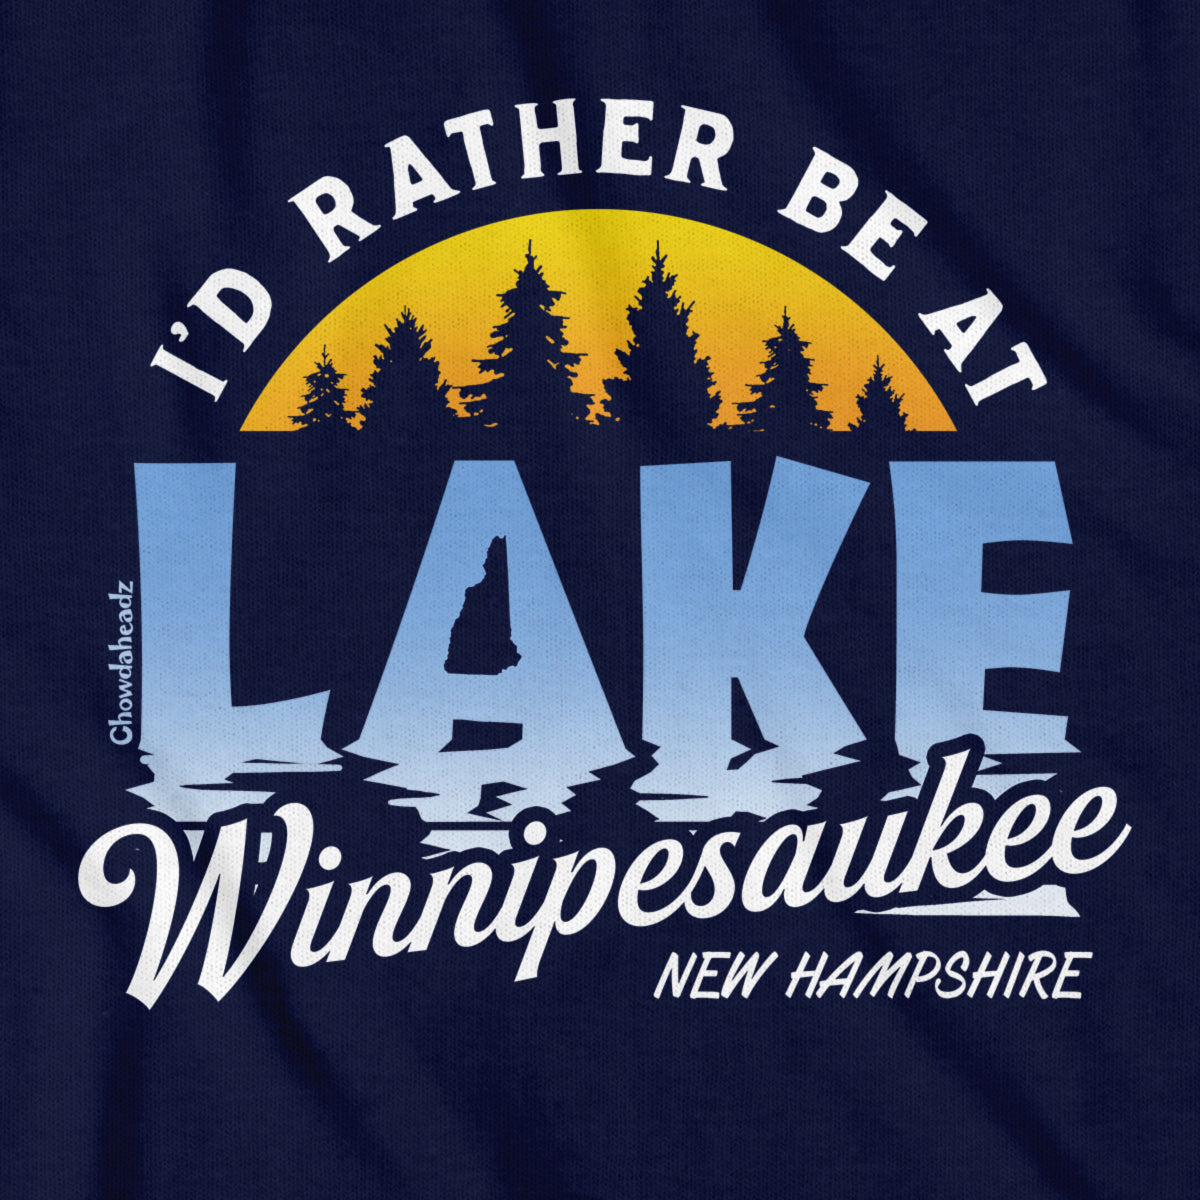 I'd Rather Be at Lake Winnipesaukee T-Shirt - Chowdaheadz